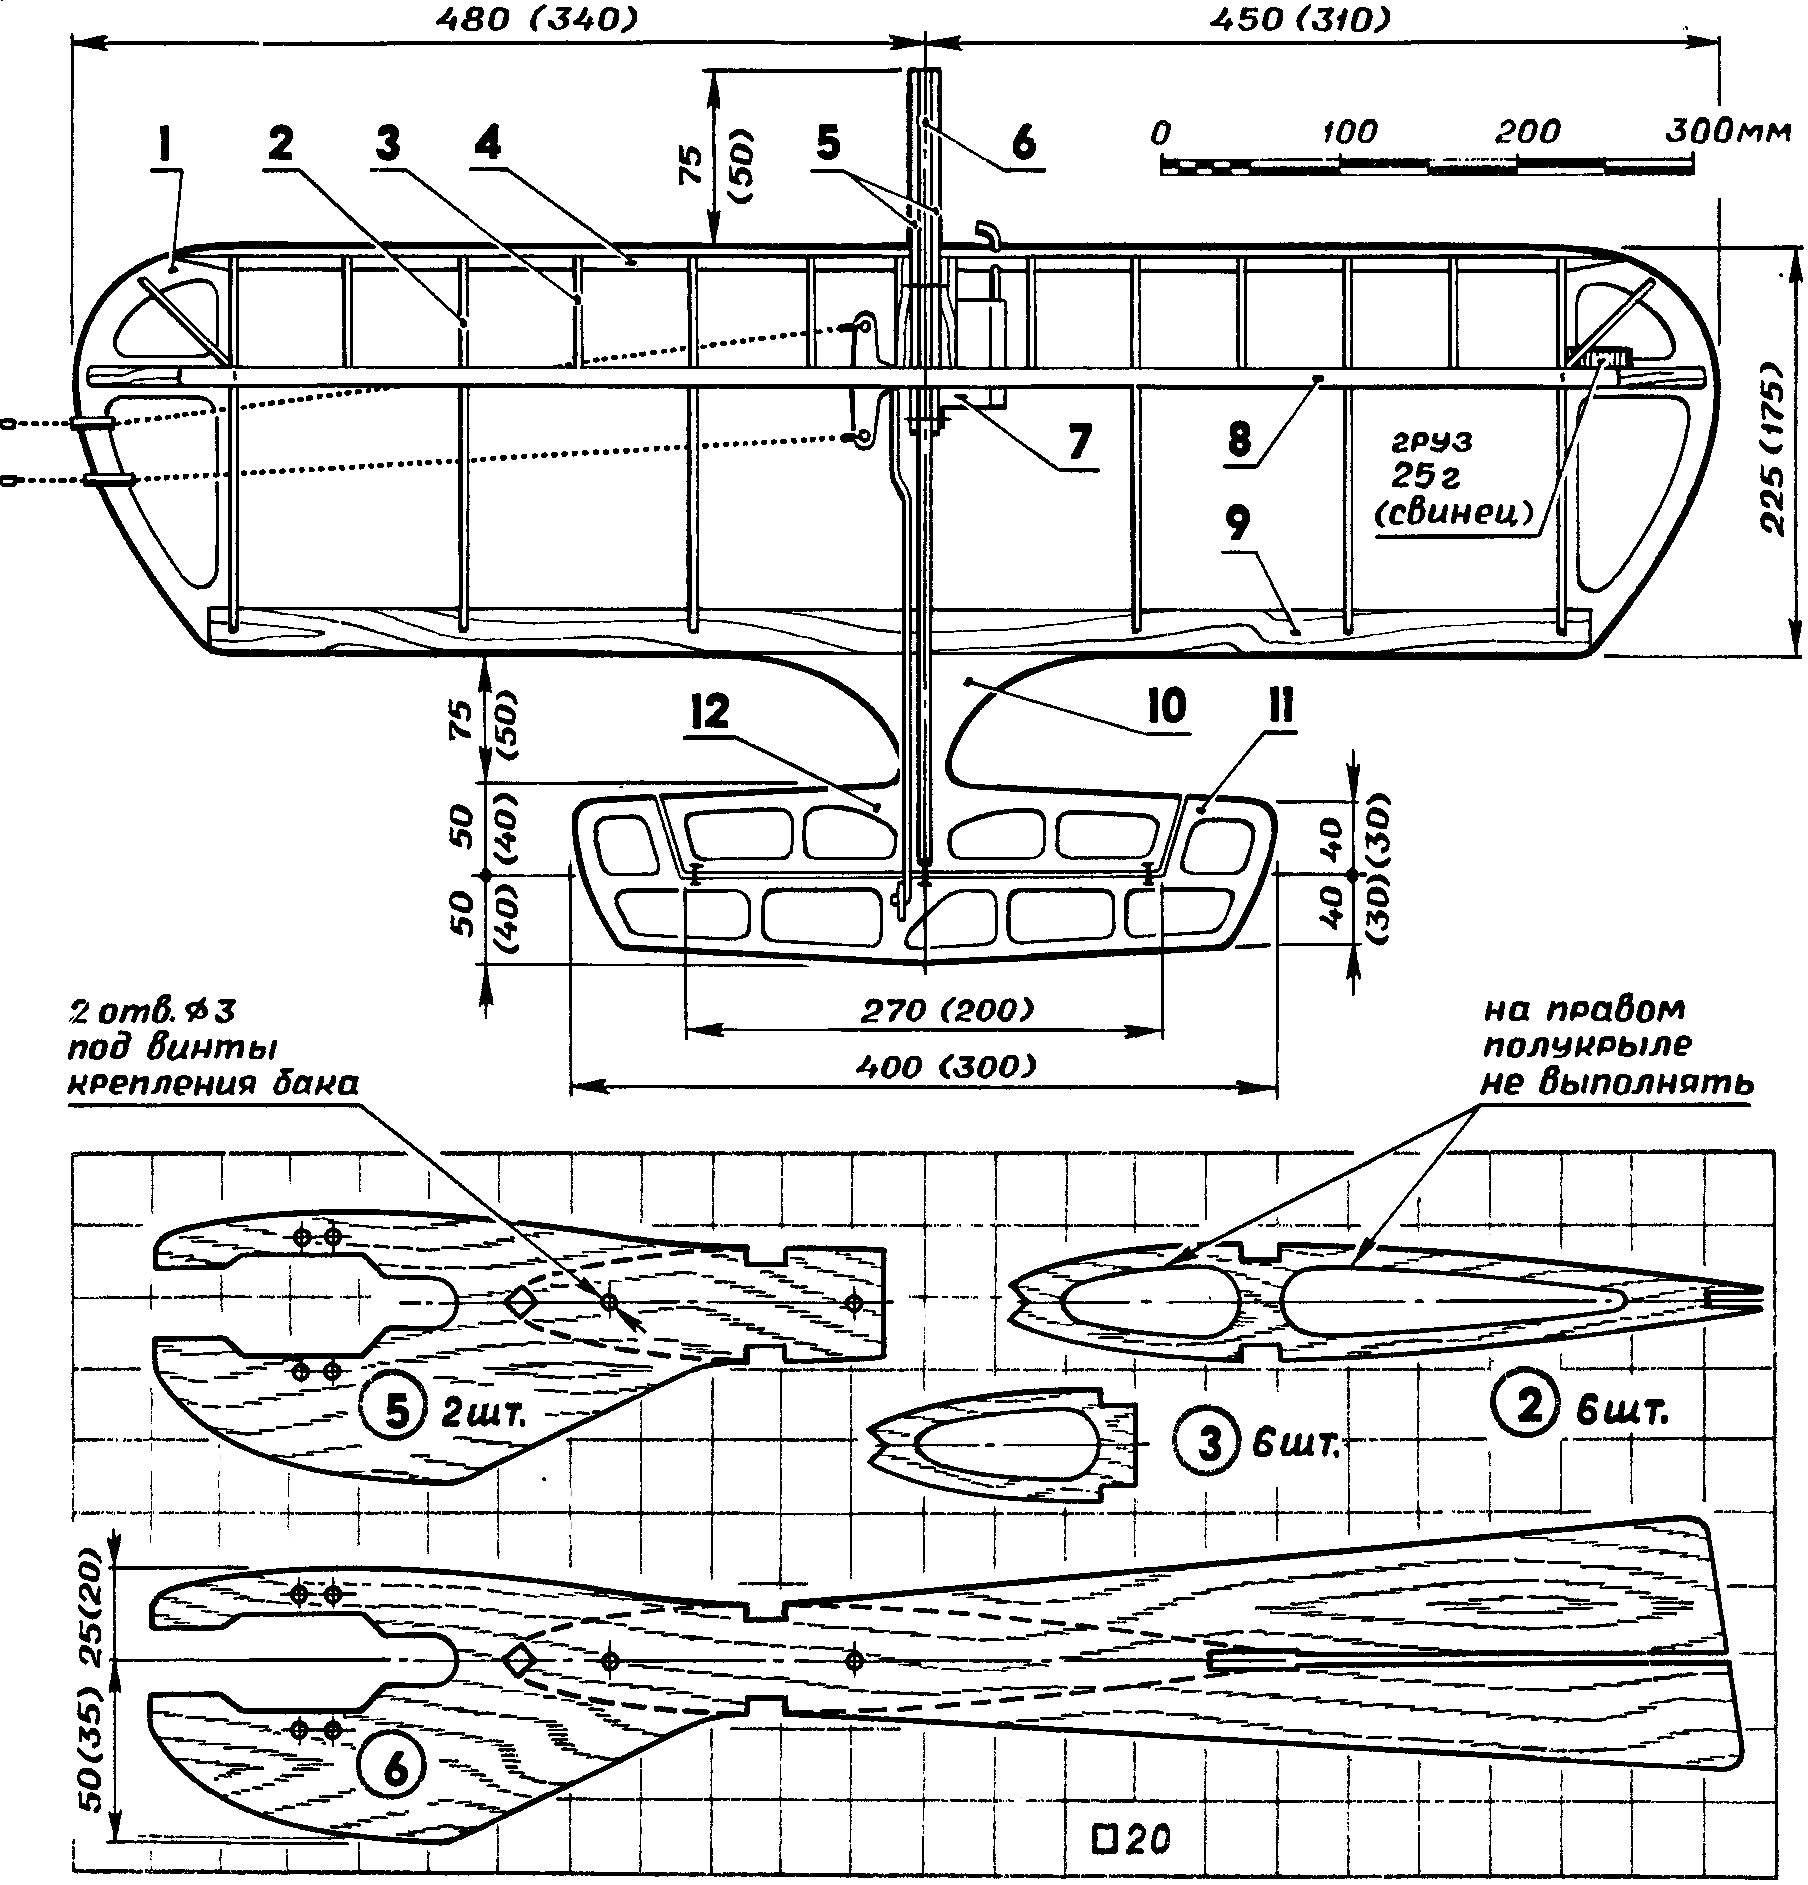 Control line model airplane schematic